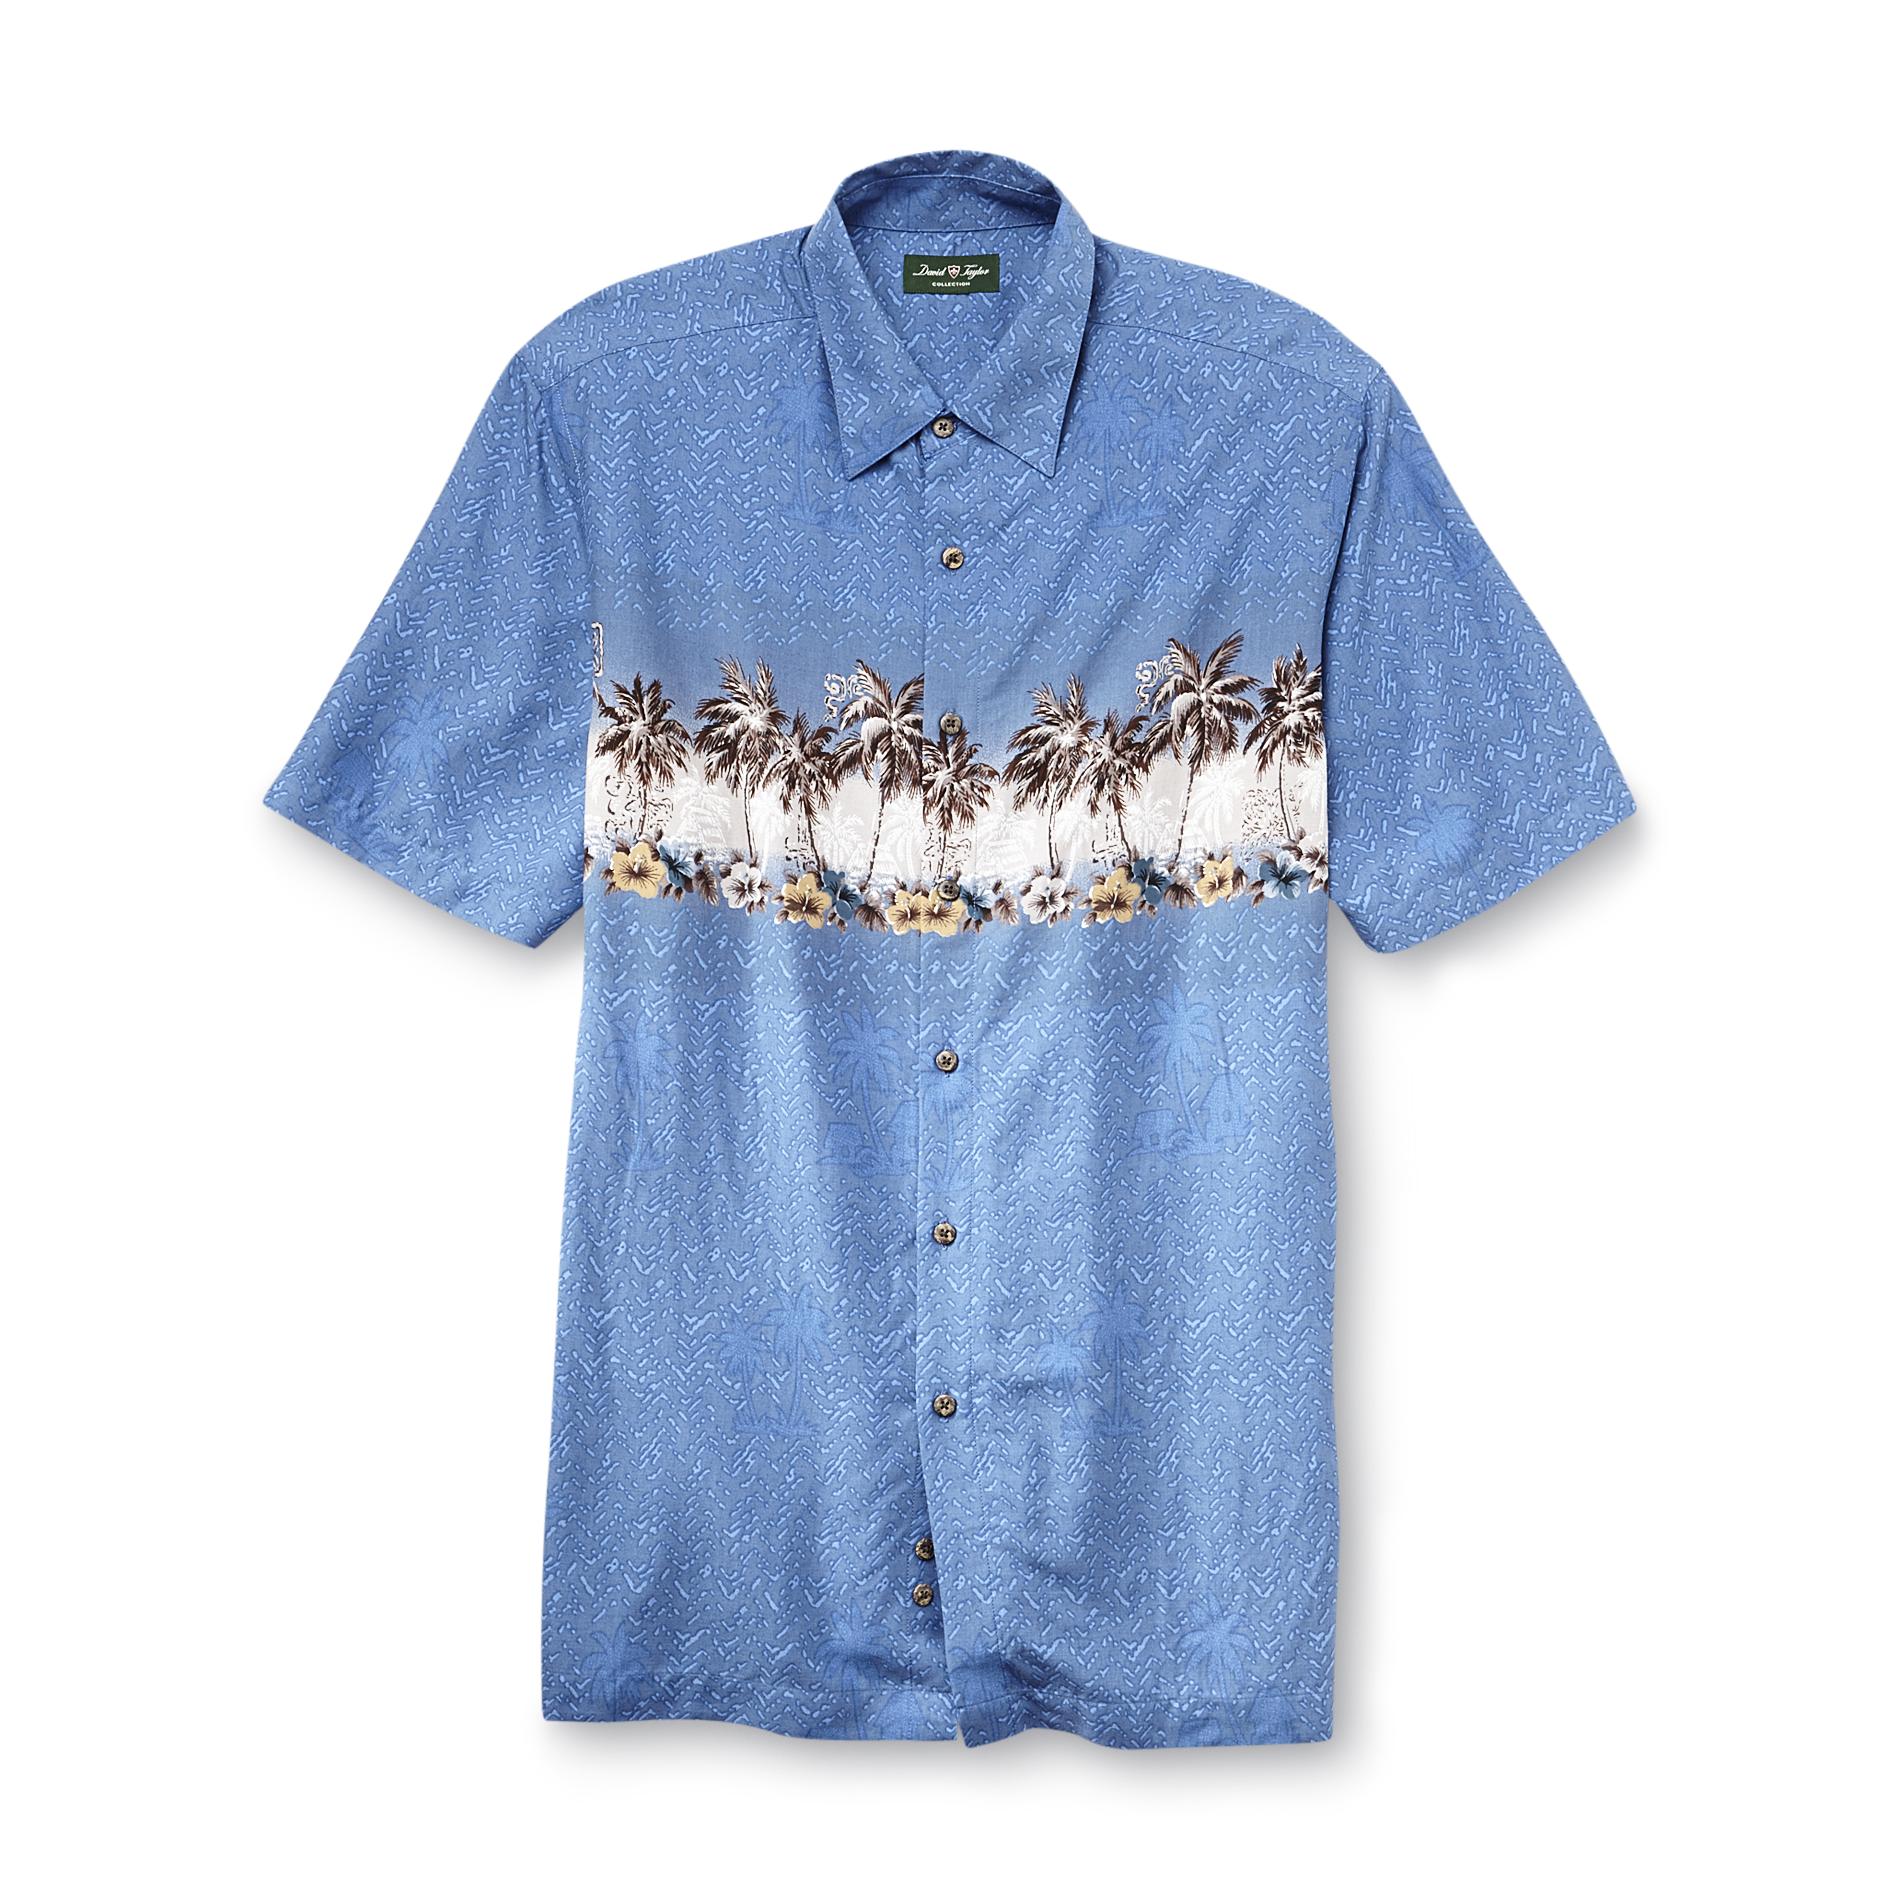 David Taylor Collection Men's Woven Shirt - Tropical